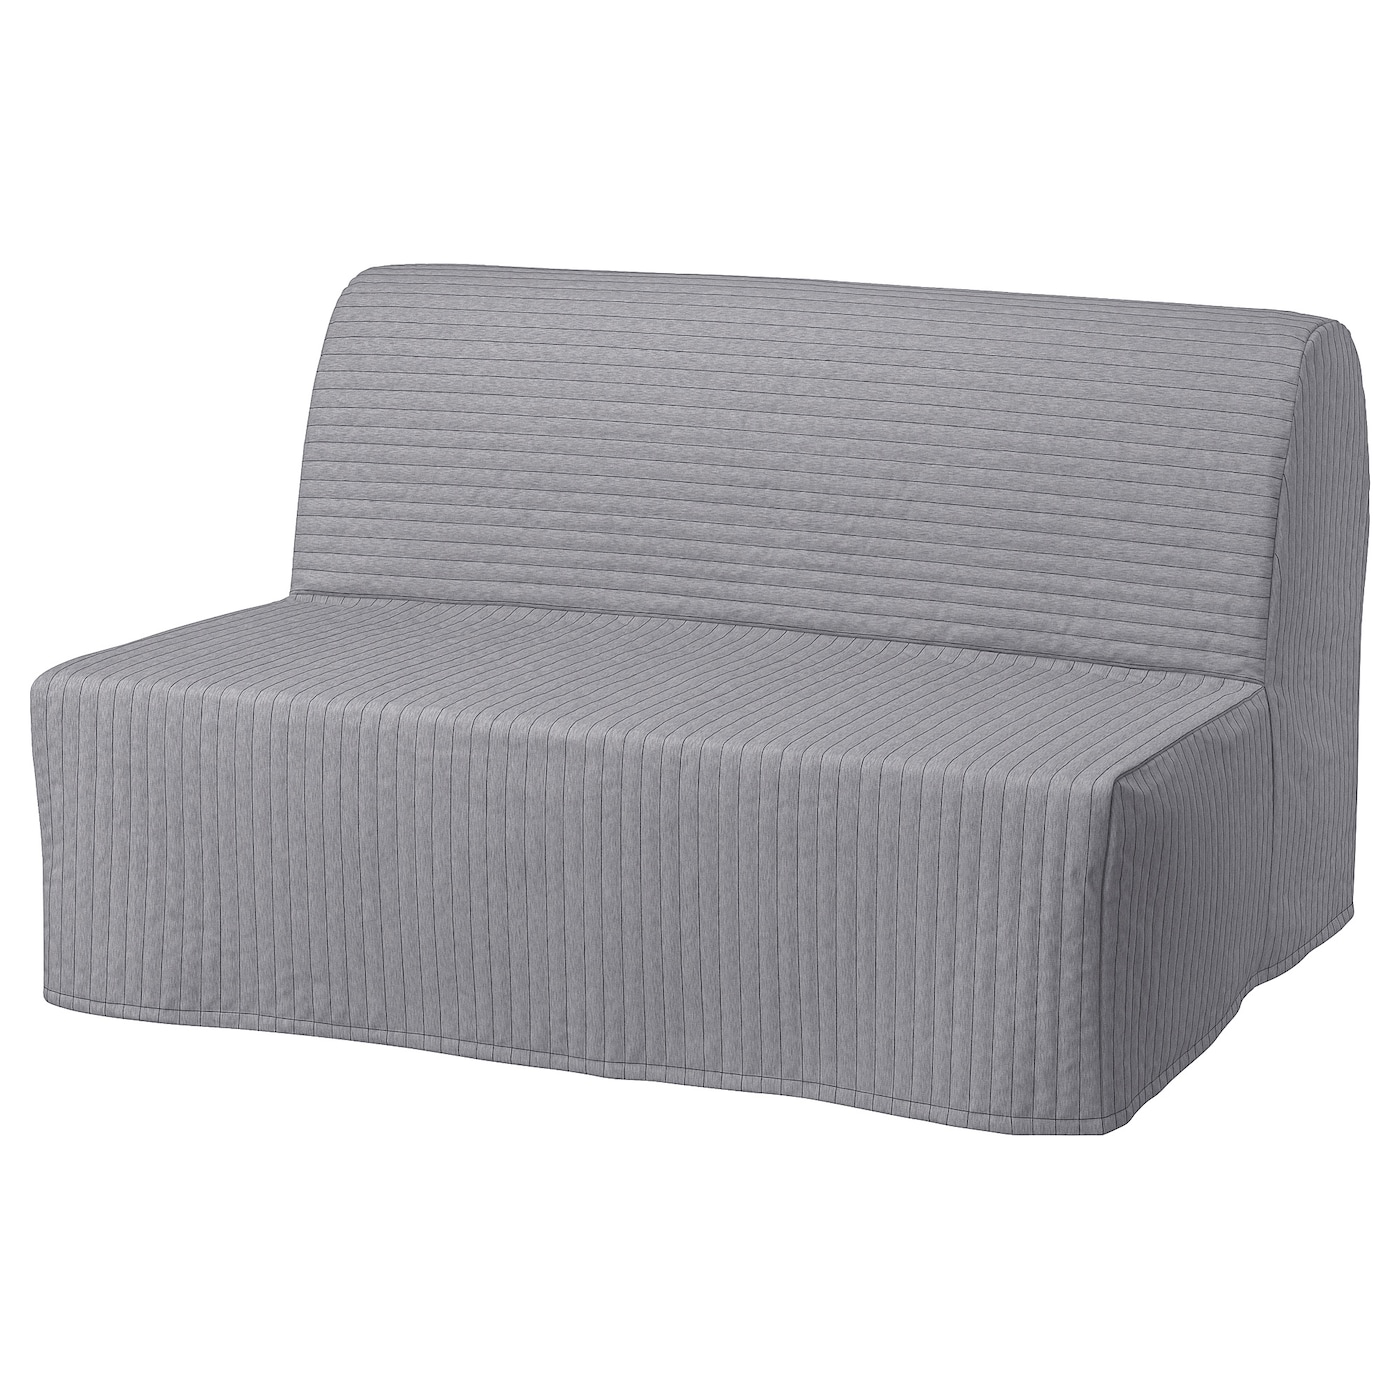 ЛИКСЕЛЕ ХОВЕТ 2 дивана-кровати с откидной спинкой, Книса светло-серый LYCKSELE HÅVET IKEA матрас corretto матрас corretto standart 2